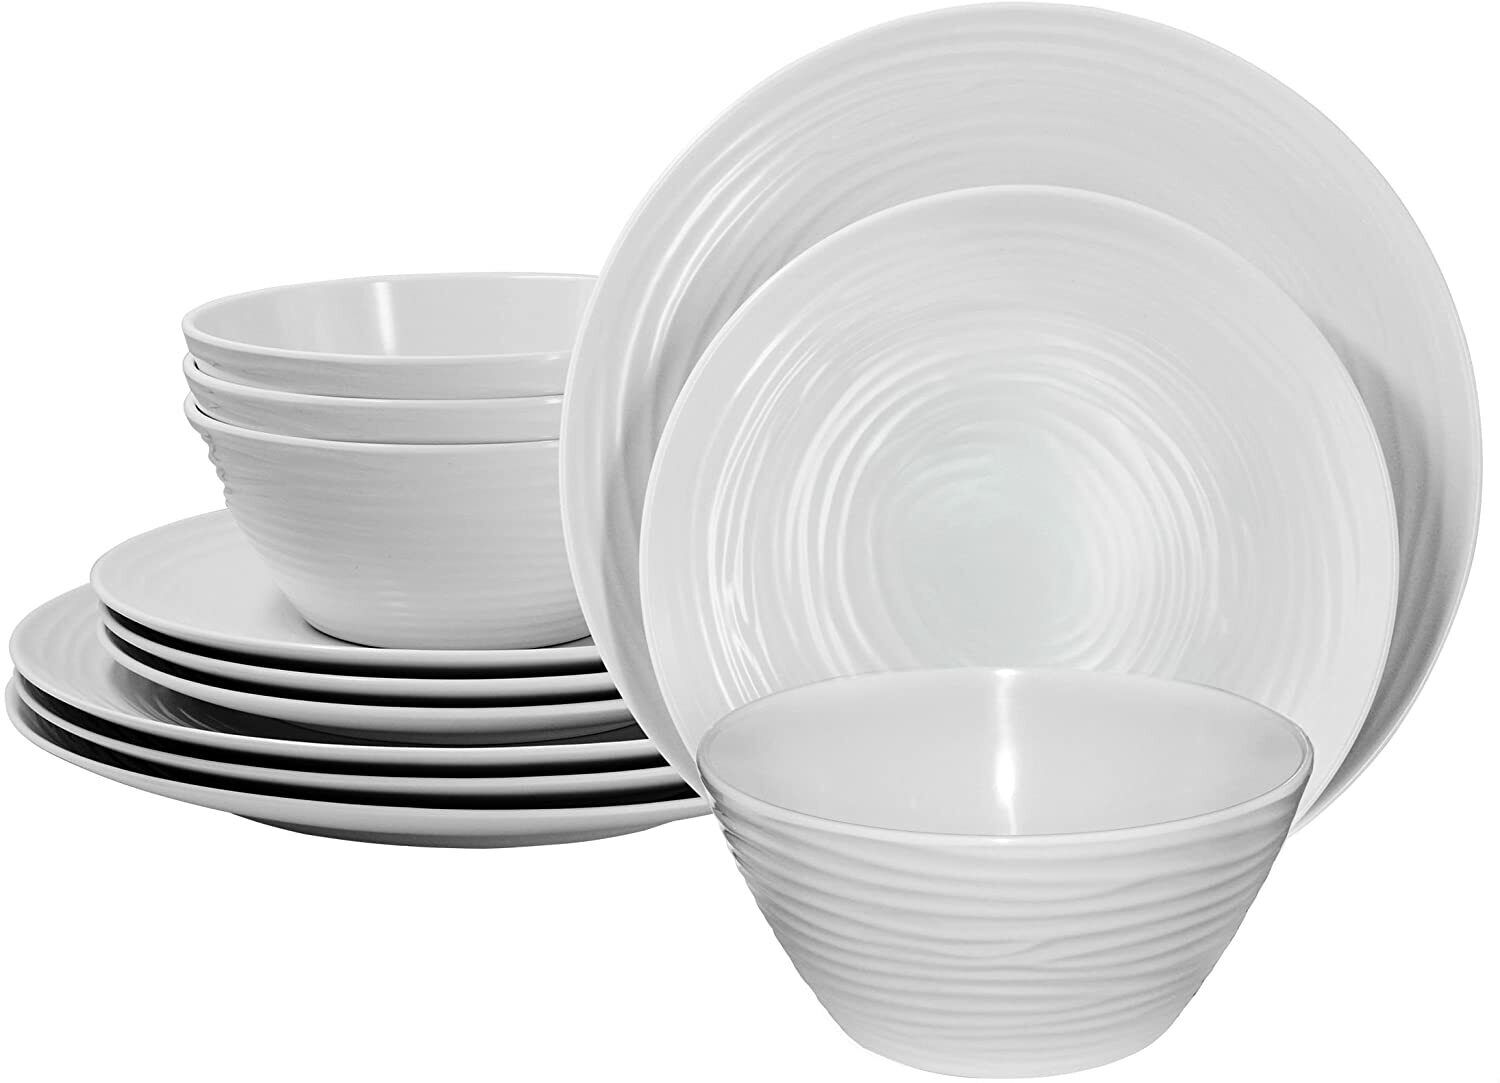 Parhoma White Melamine Plastic Home Dinnerware Set, 12-Piece Ser